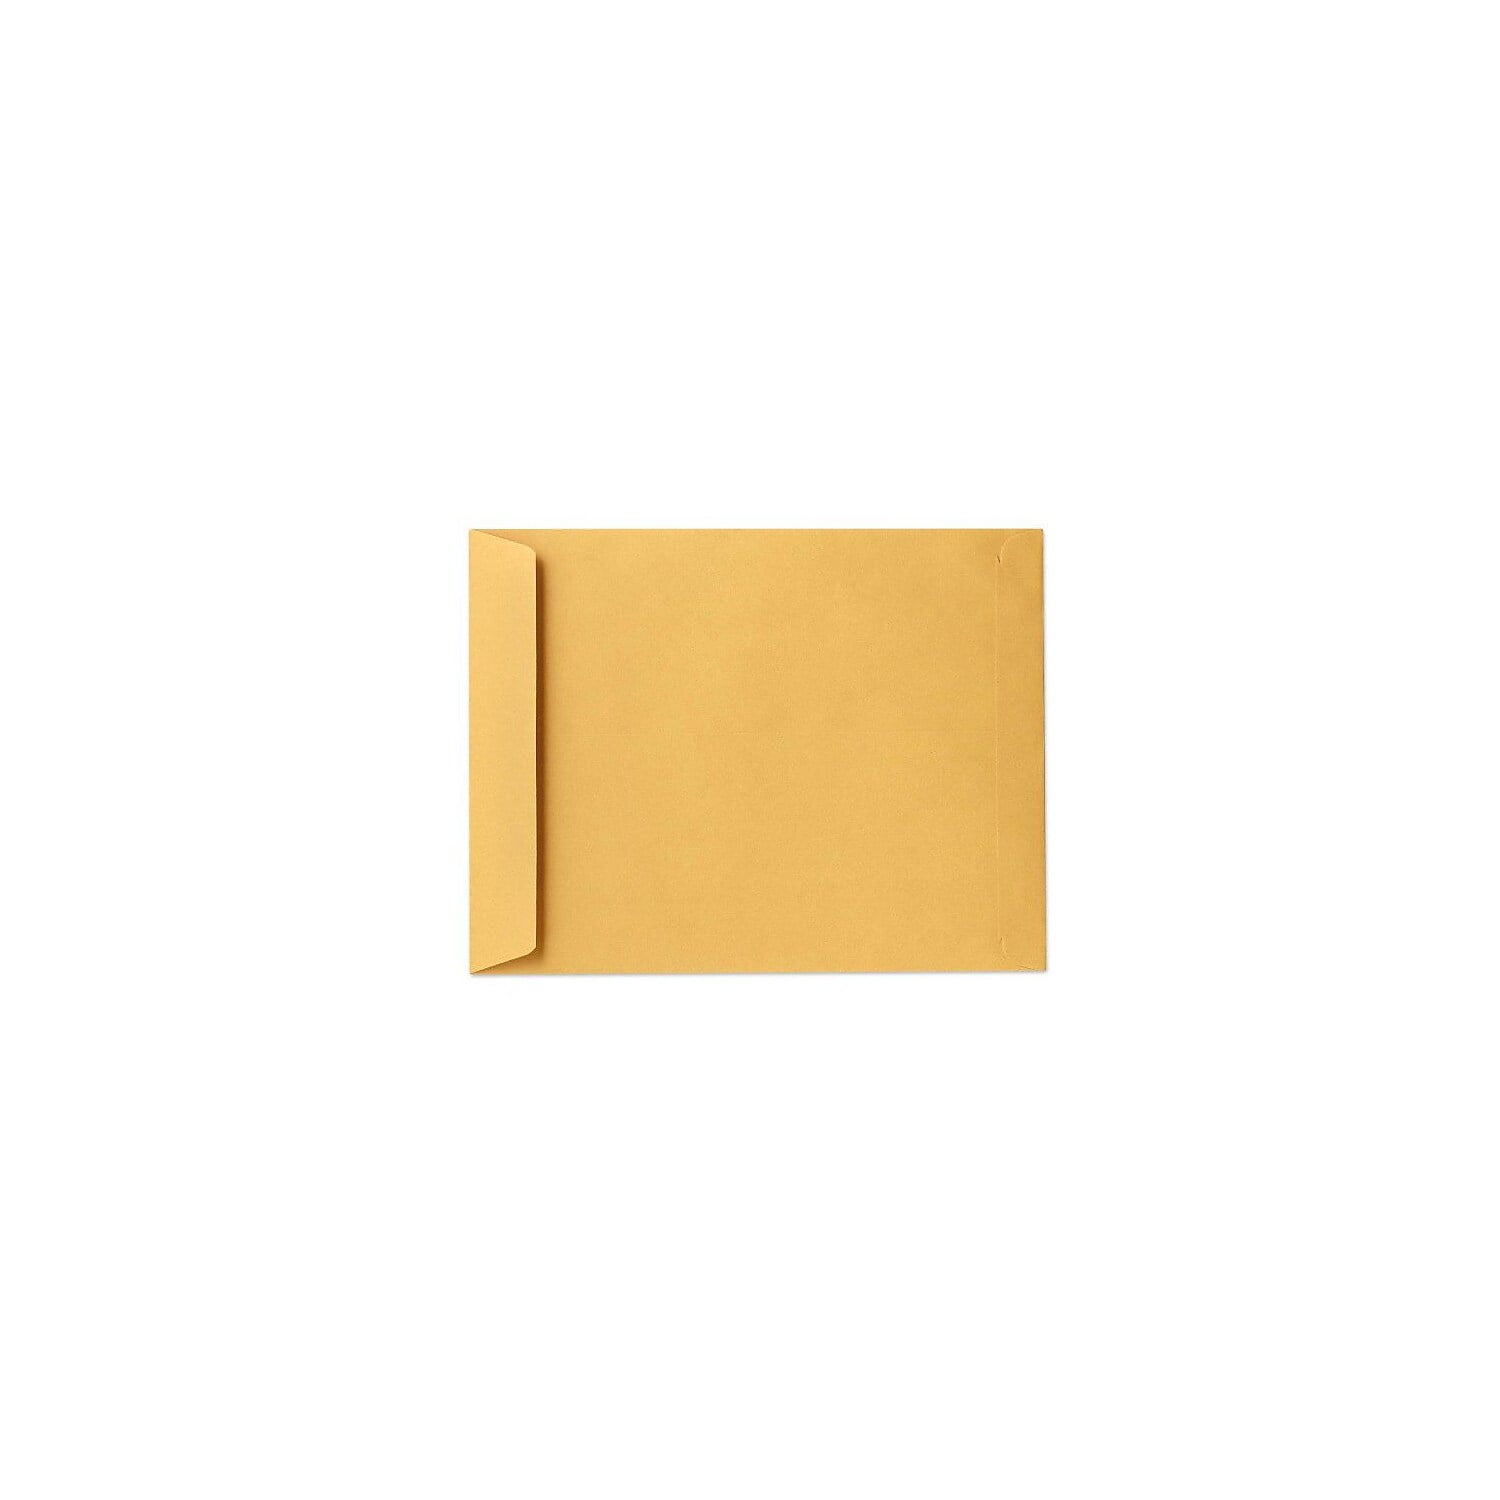 148 x 148mm Greeting Cards Plus Envelopes